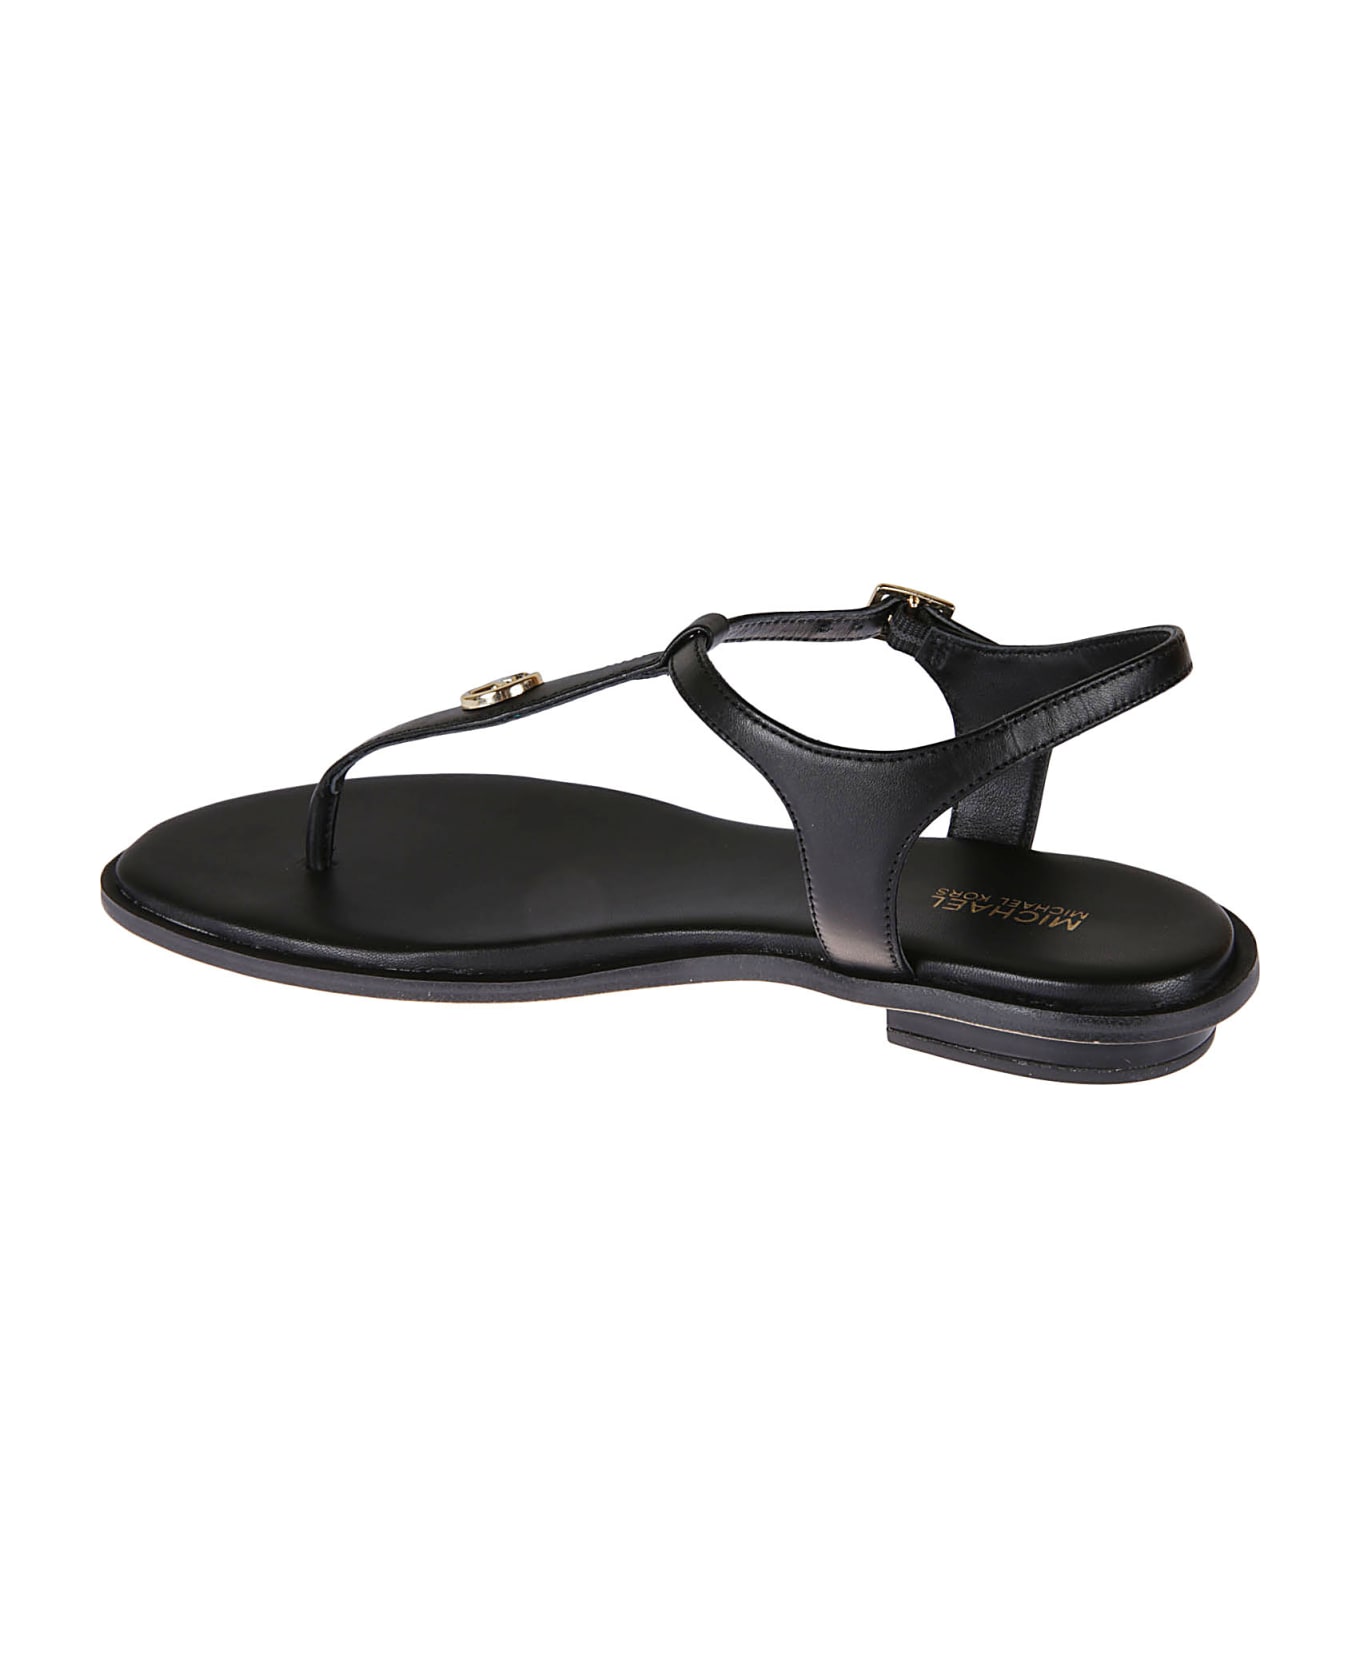 Michael Kors Mallory Thong Sandals - Black